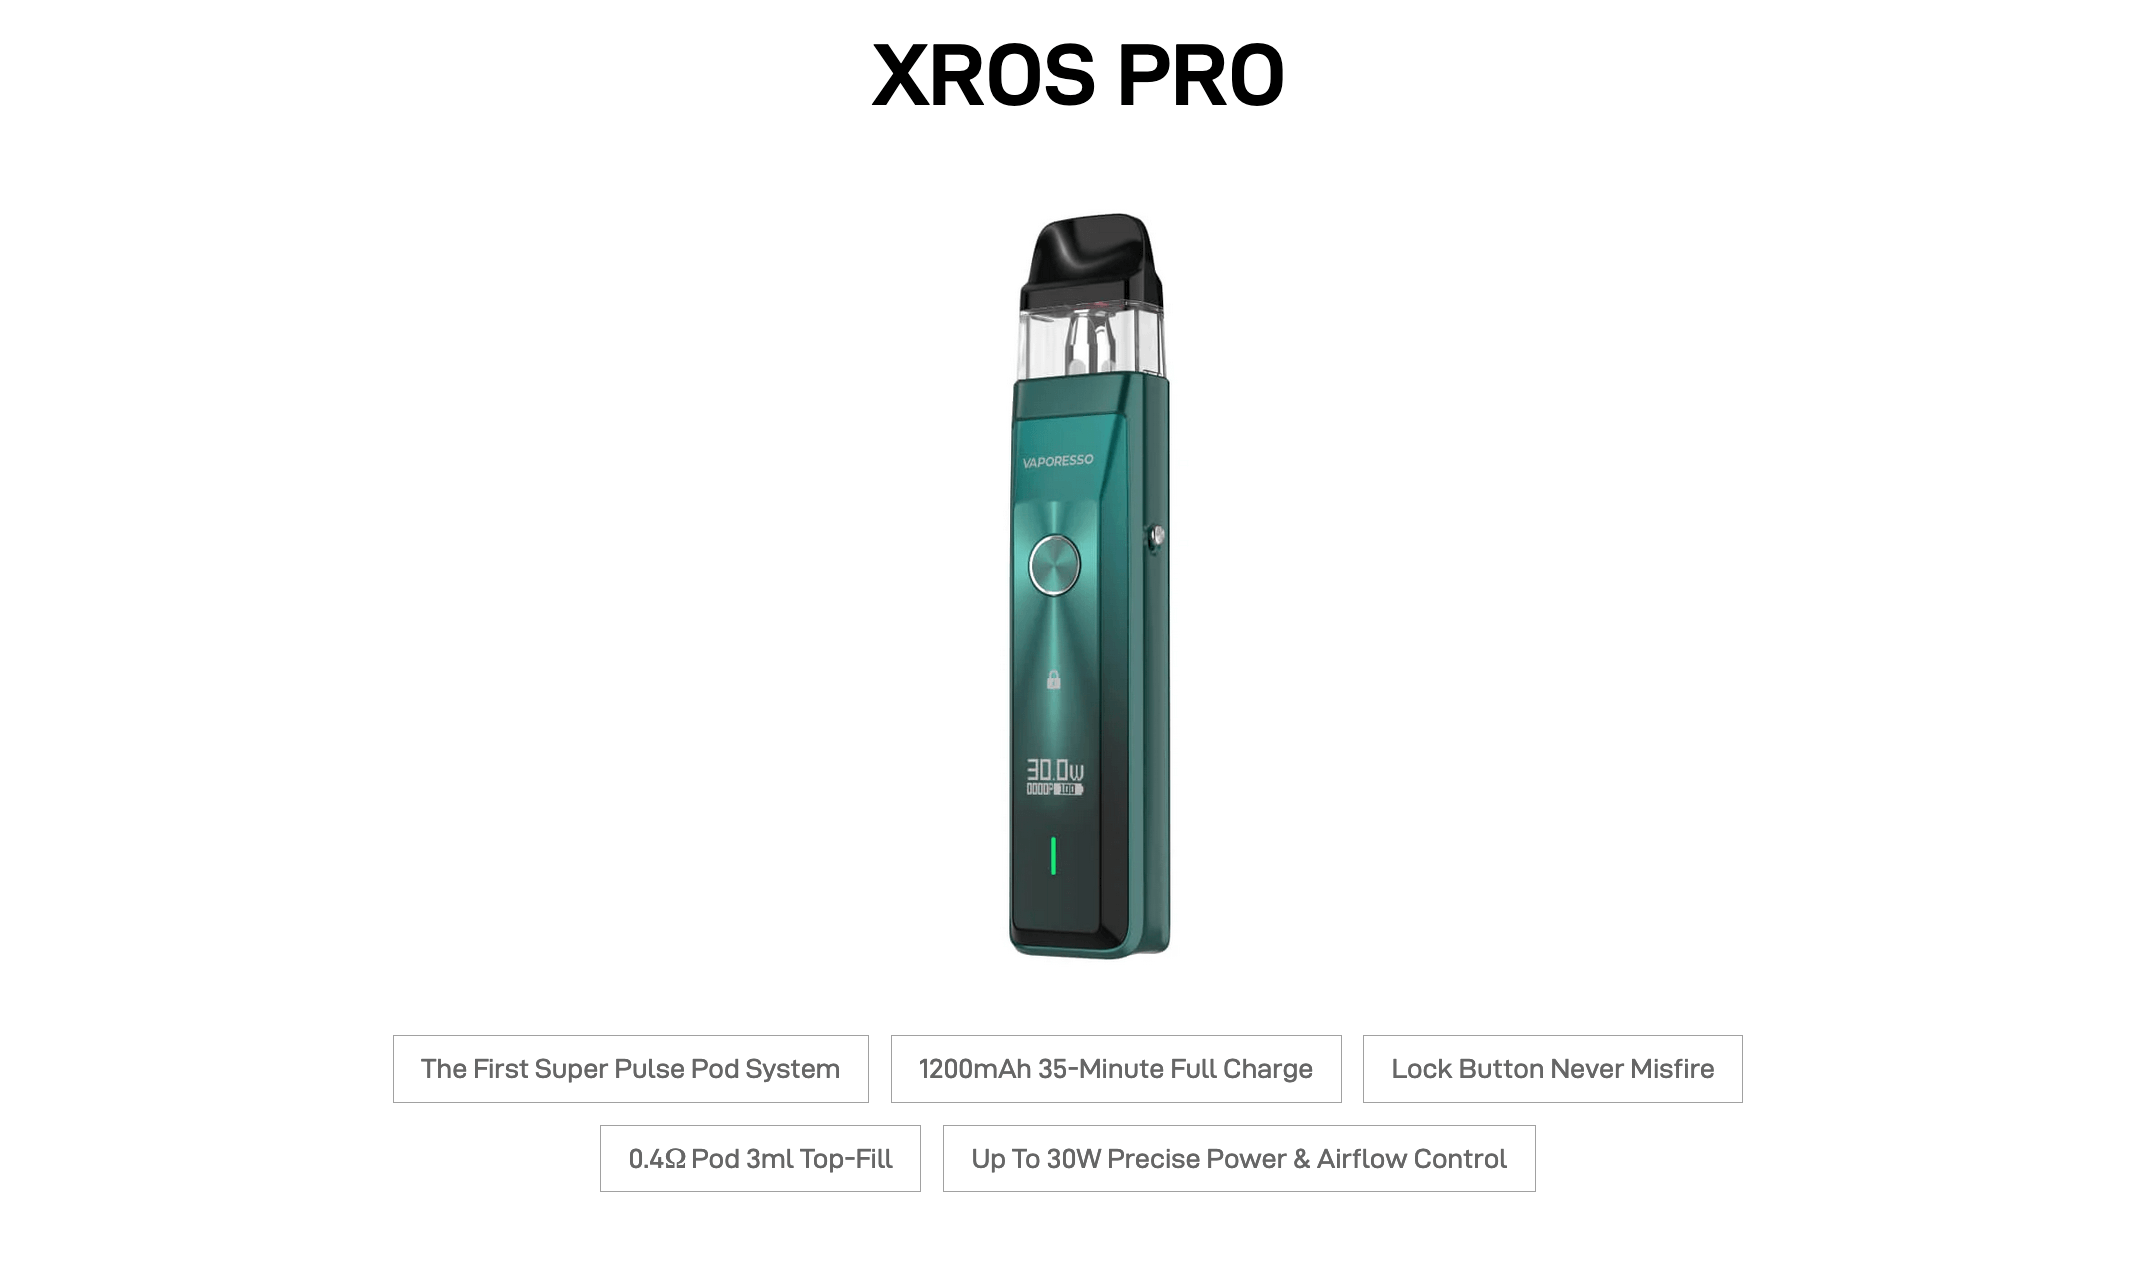 Vaporesso Xros Pro - Highlight features